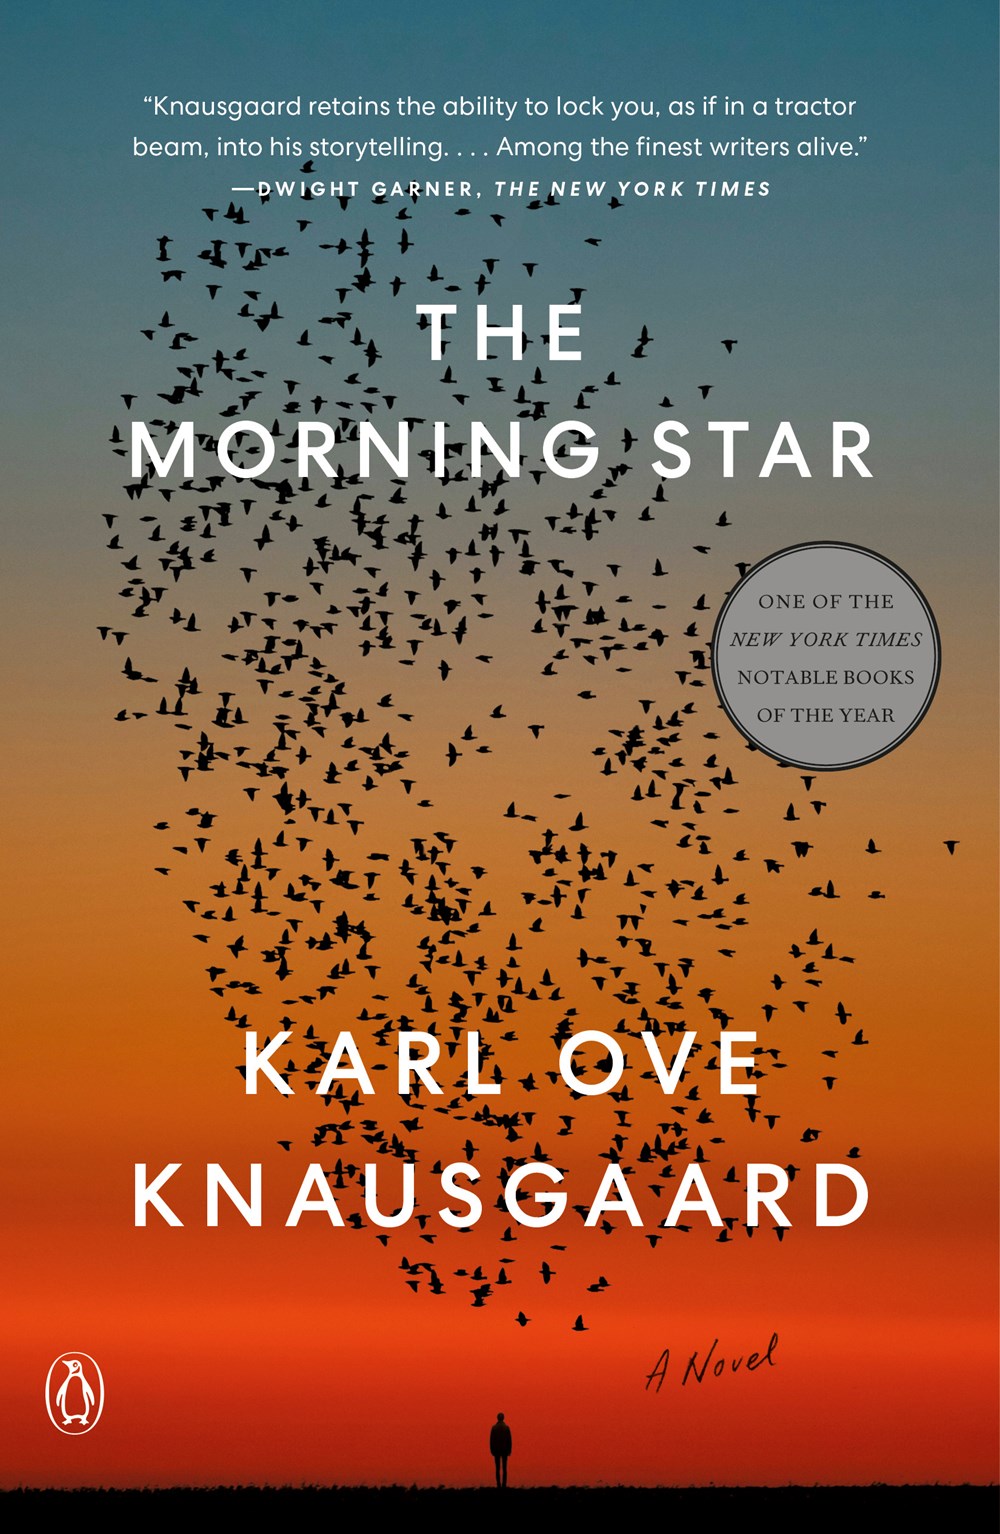 The Morning Star: A Novel by Karl Ove Knausgaard